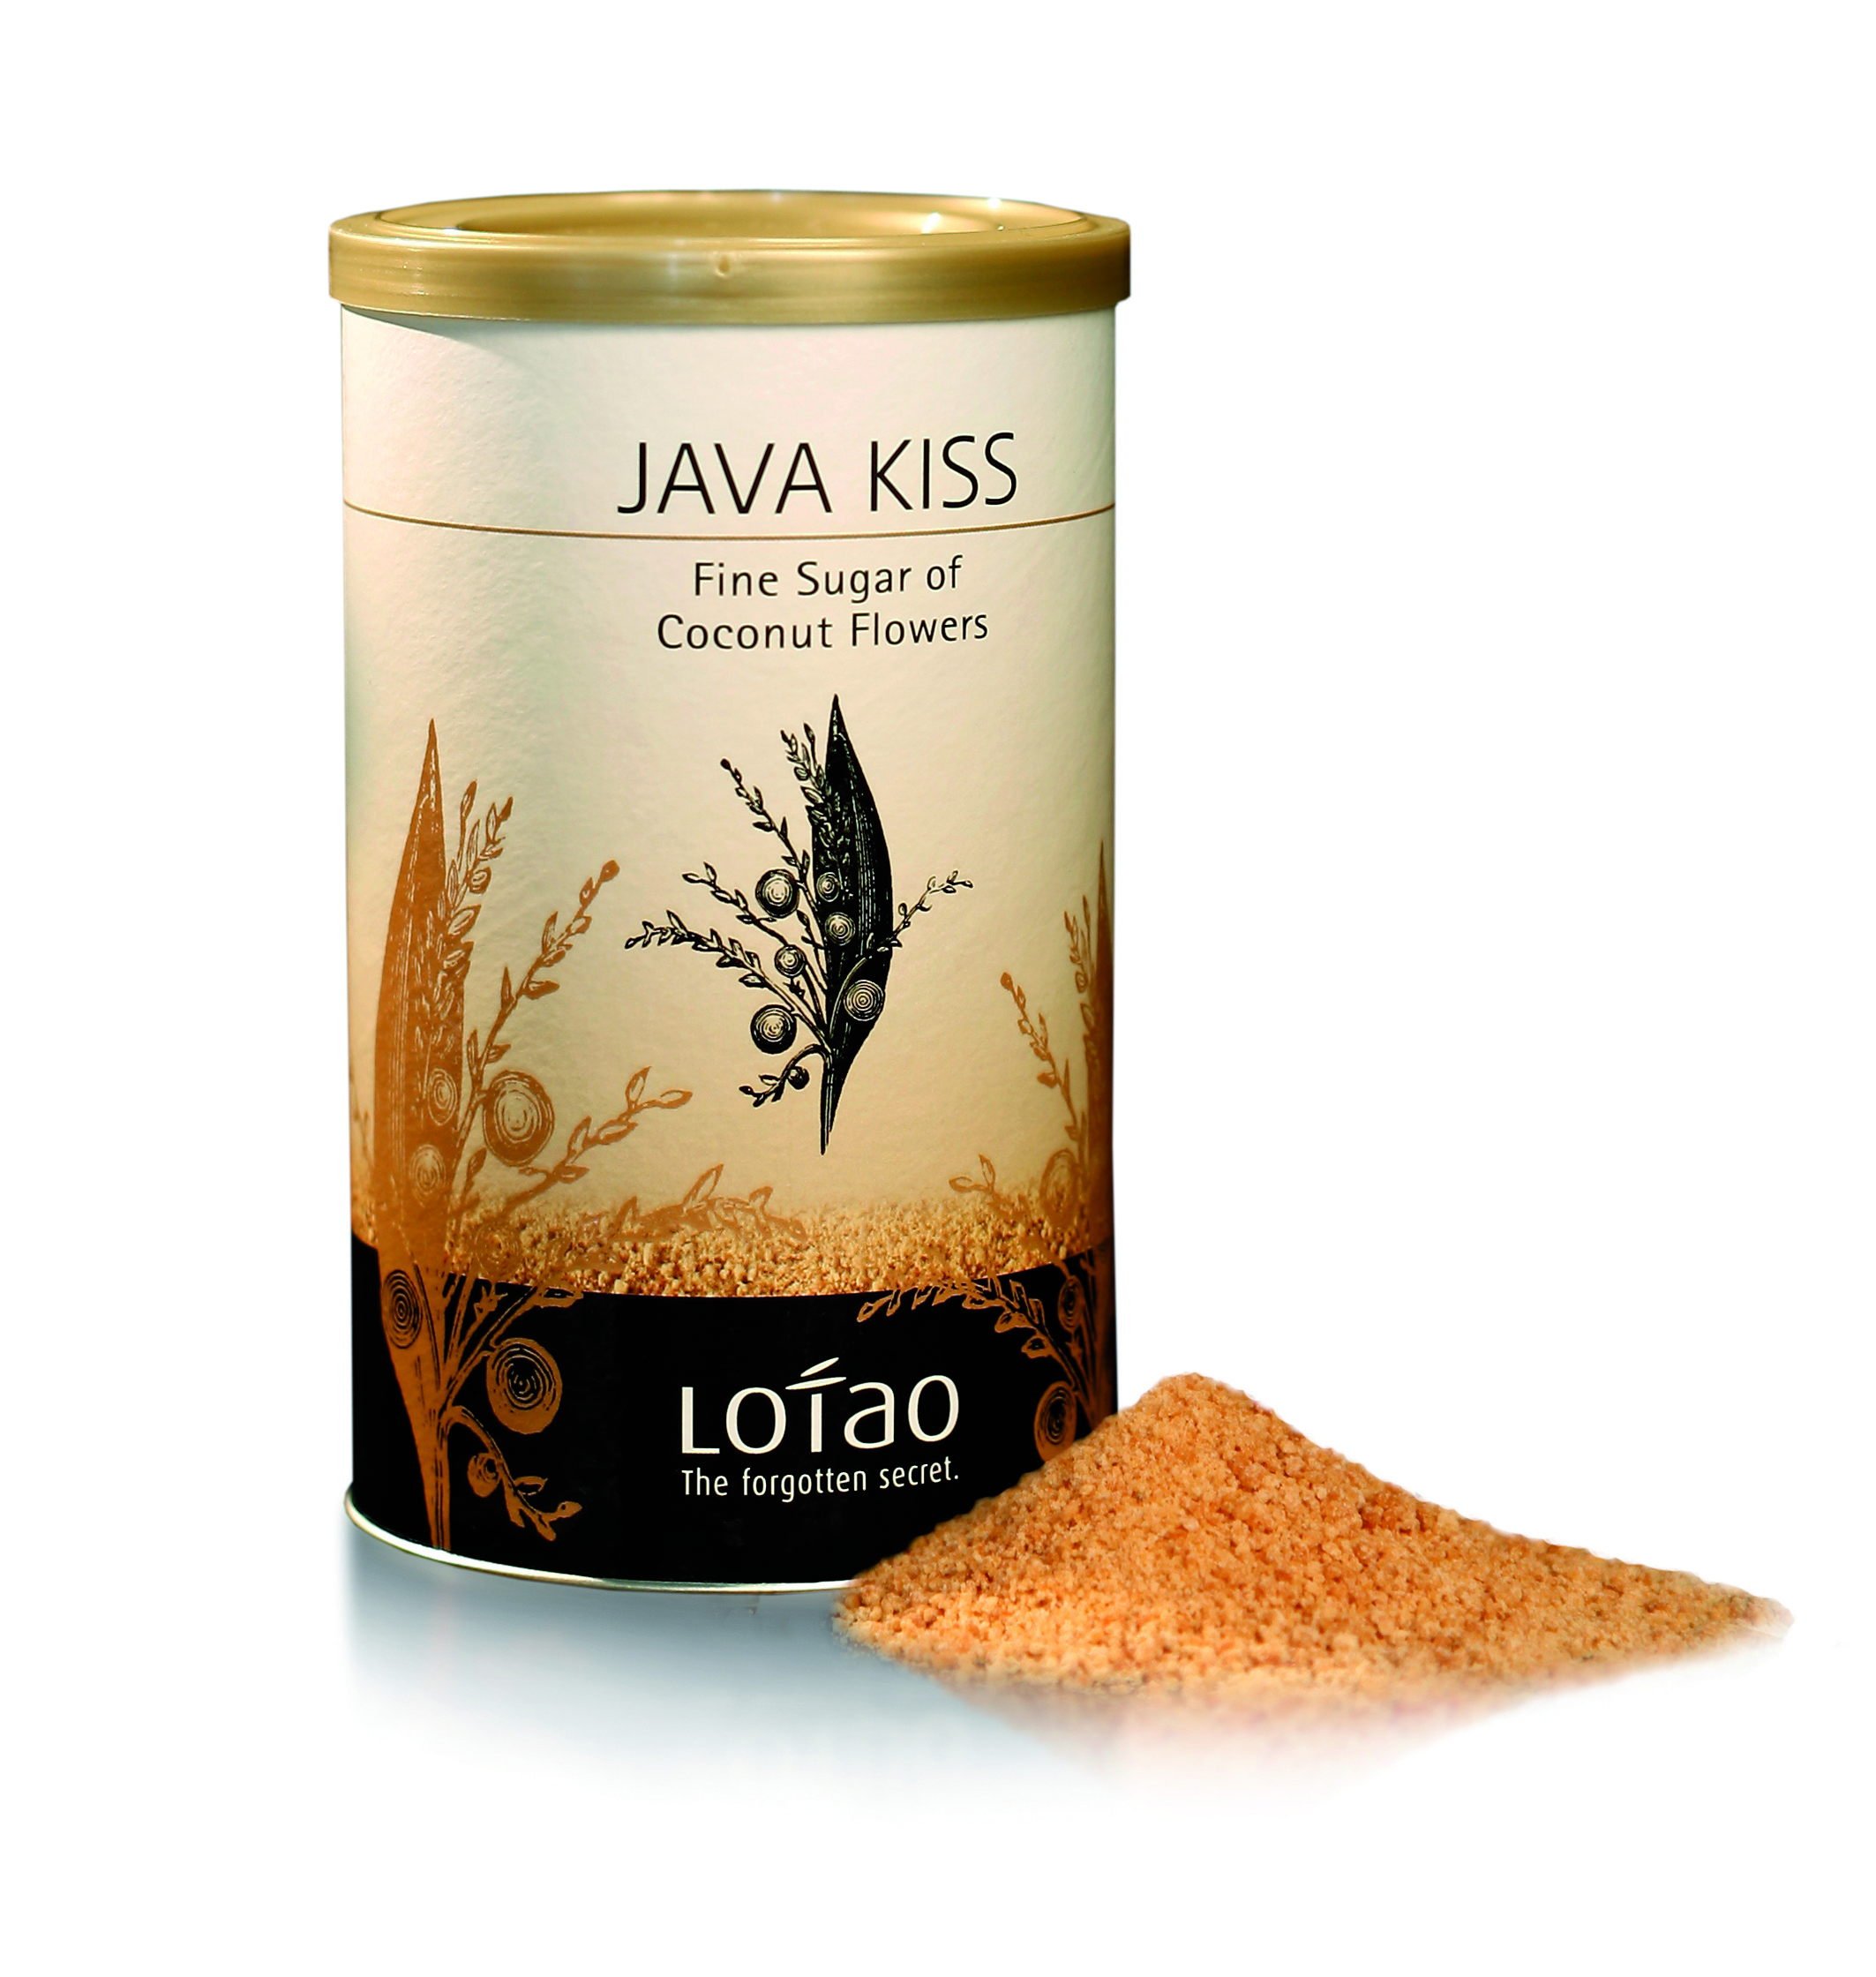 Lotao Java Kiss - Product